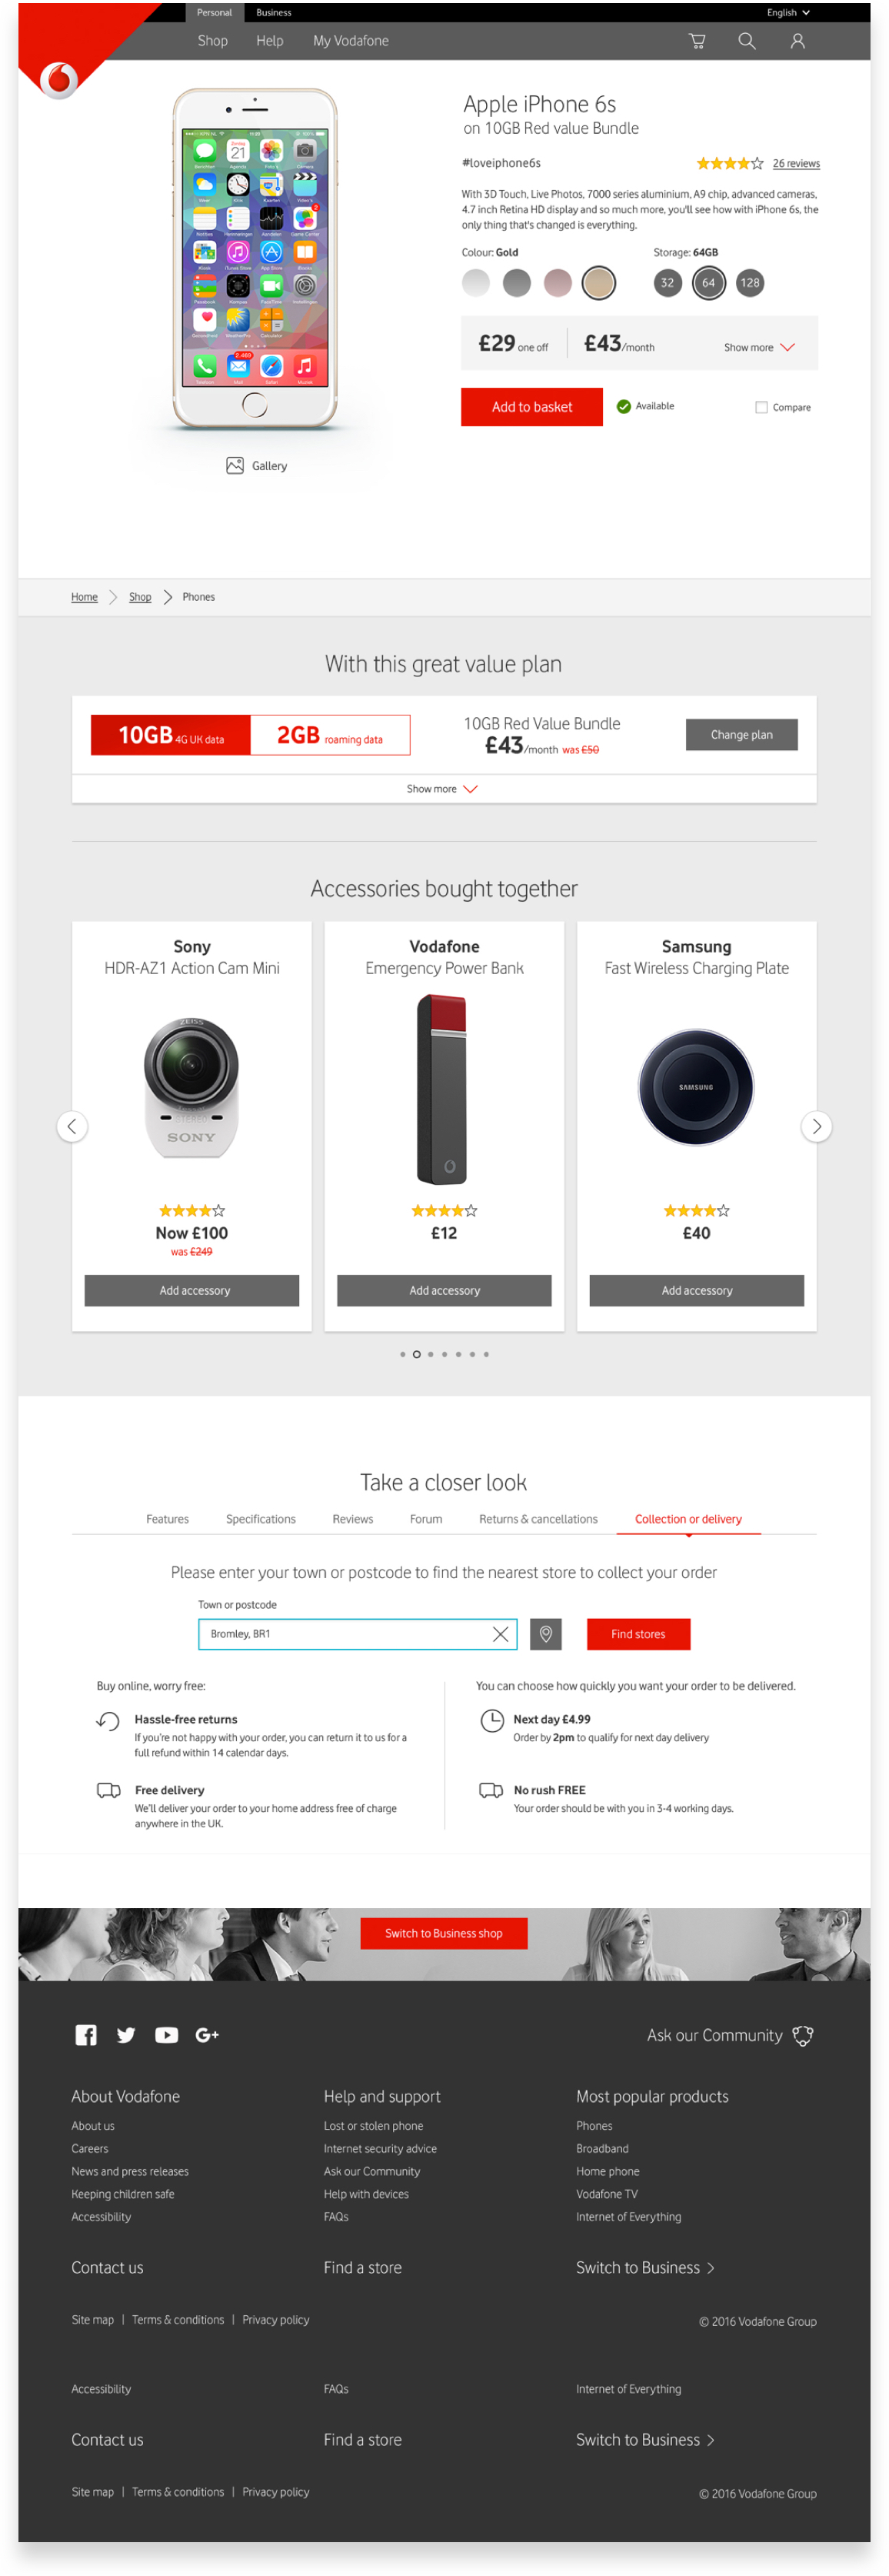 Vodafone eCommerce Website Design